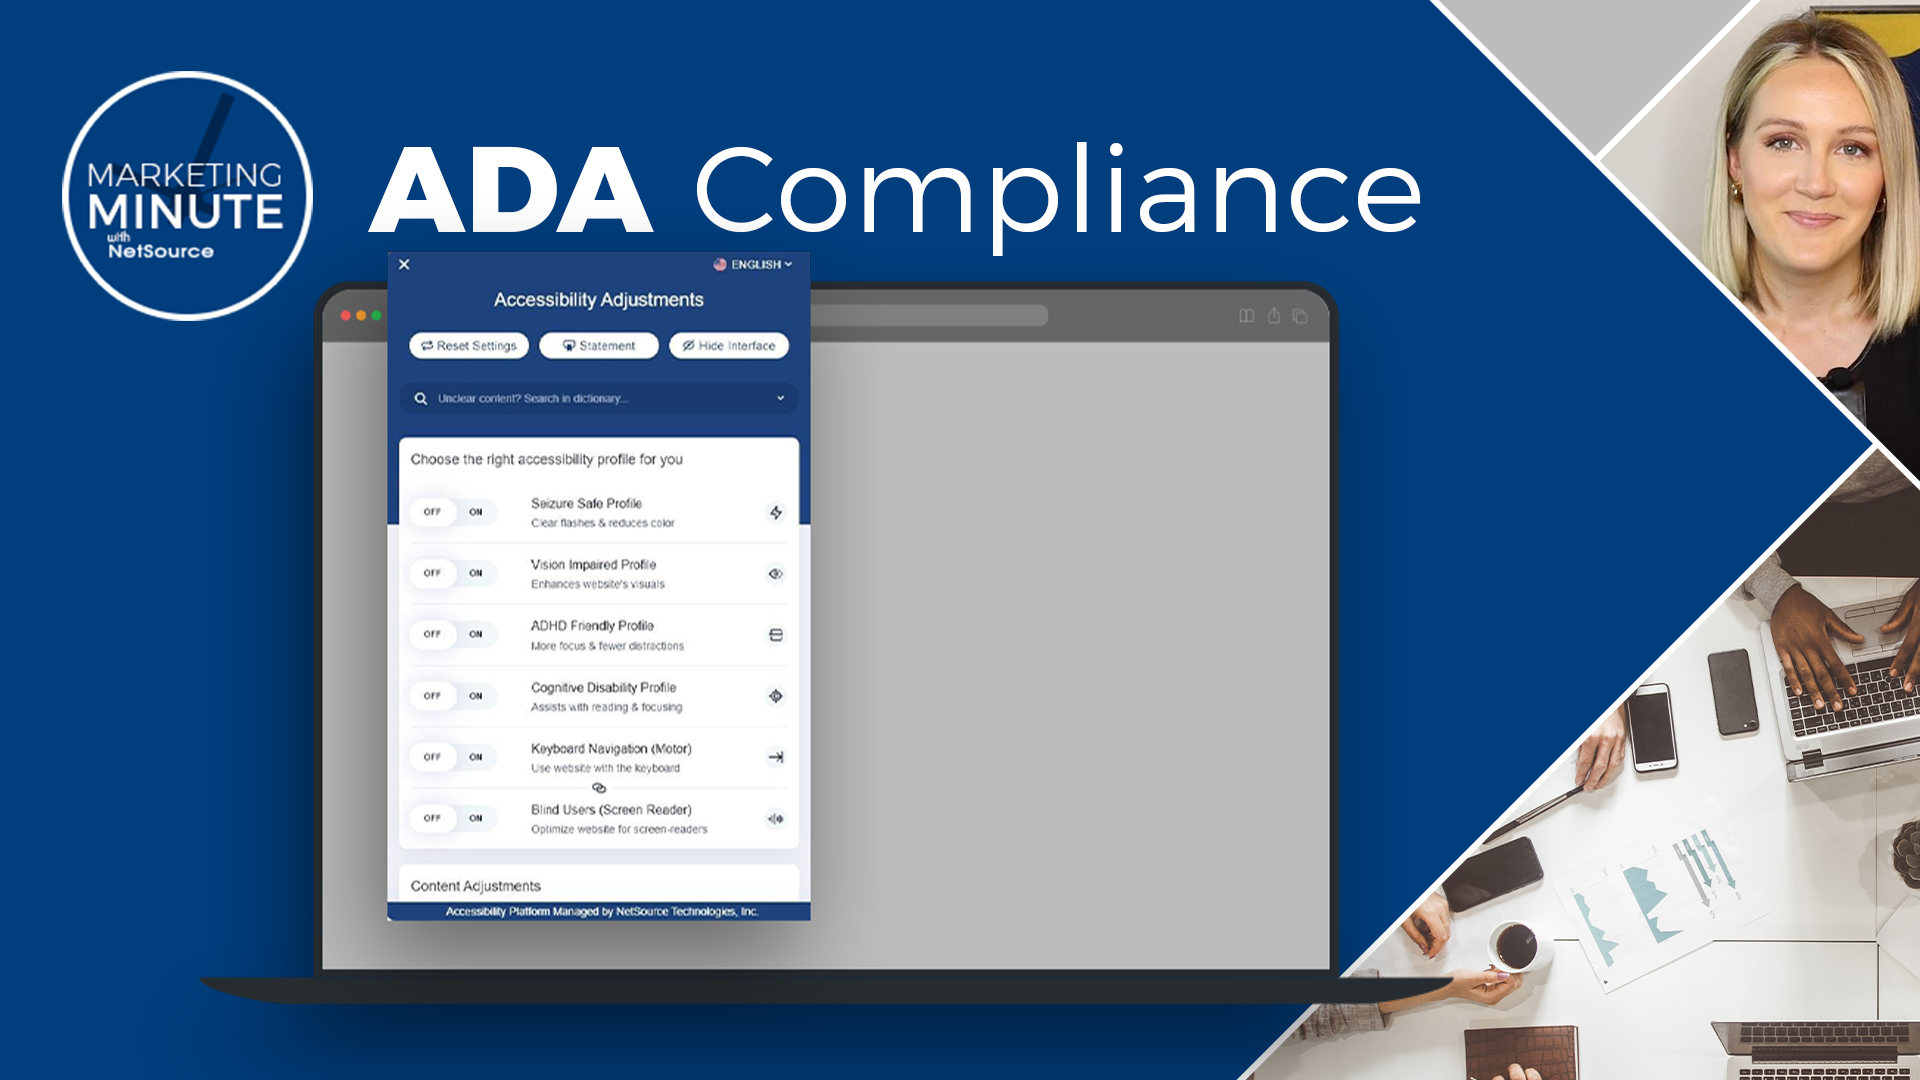 ADA Compliance window